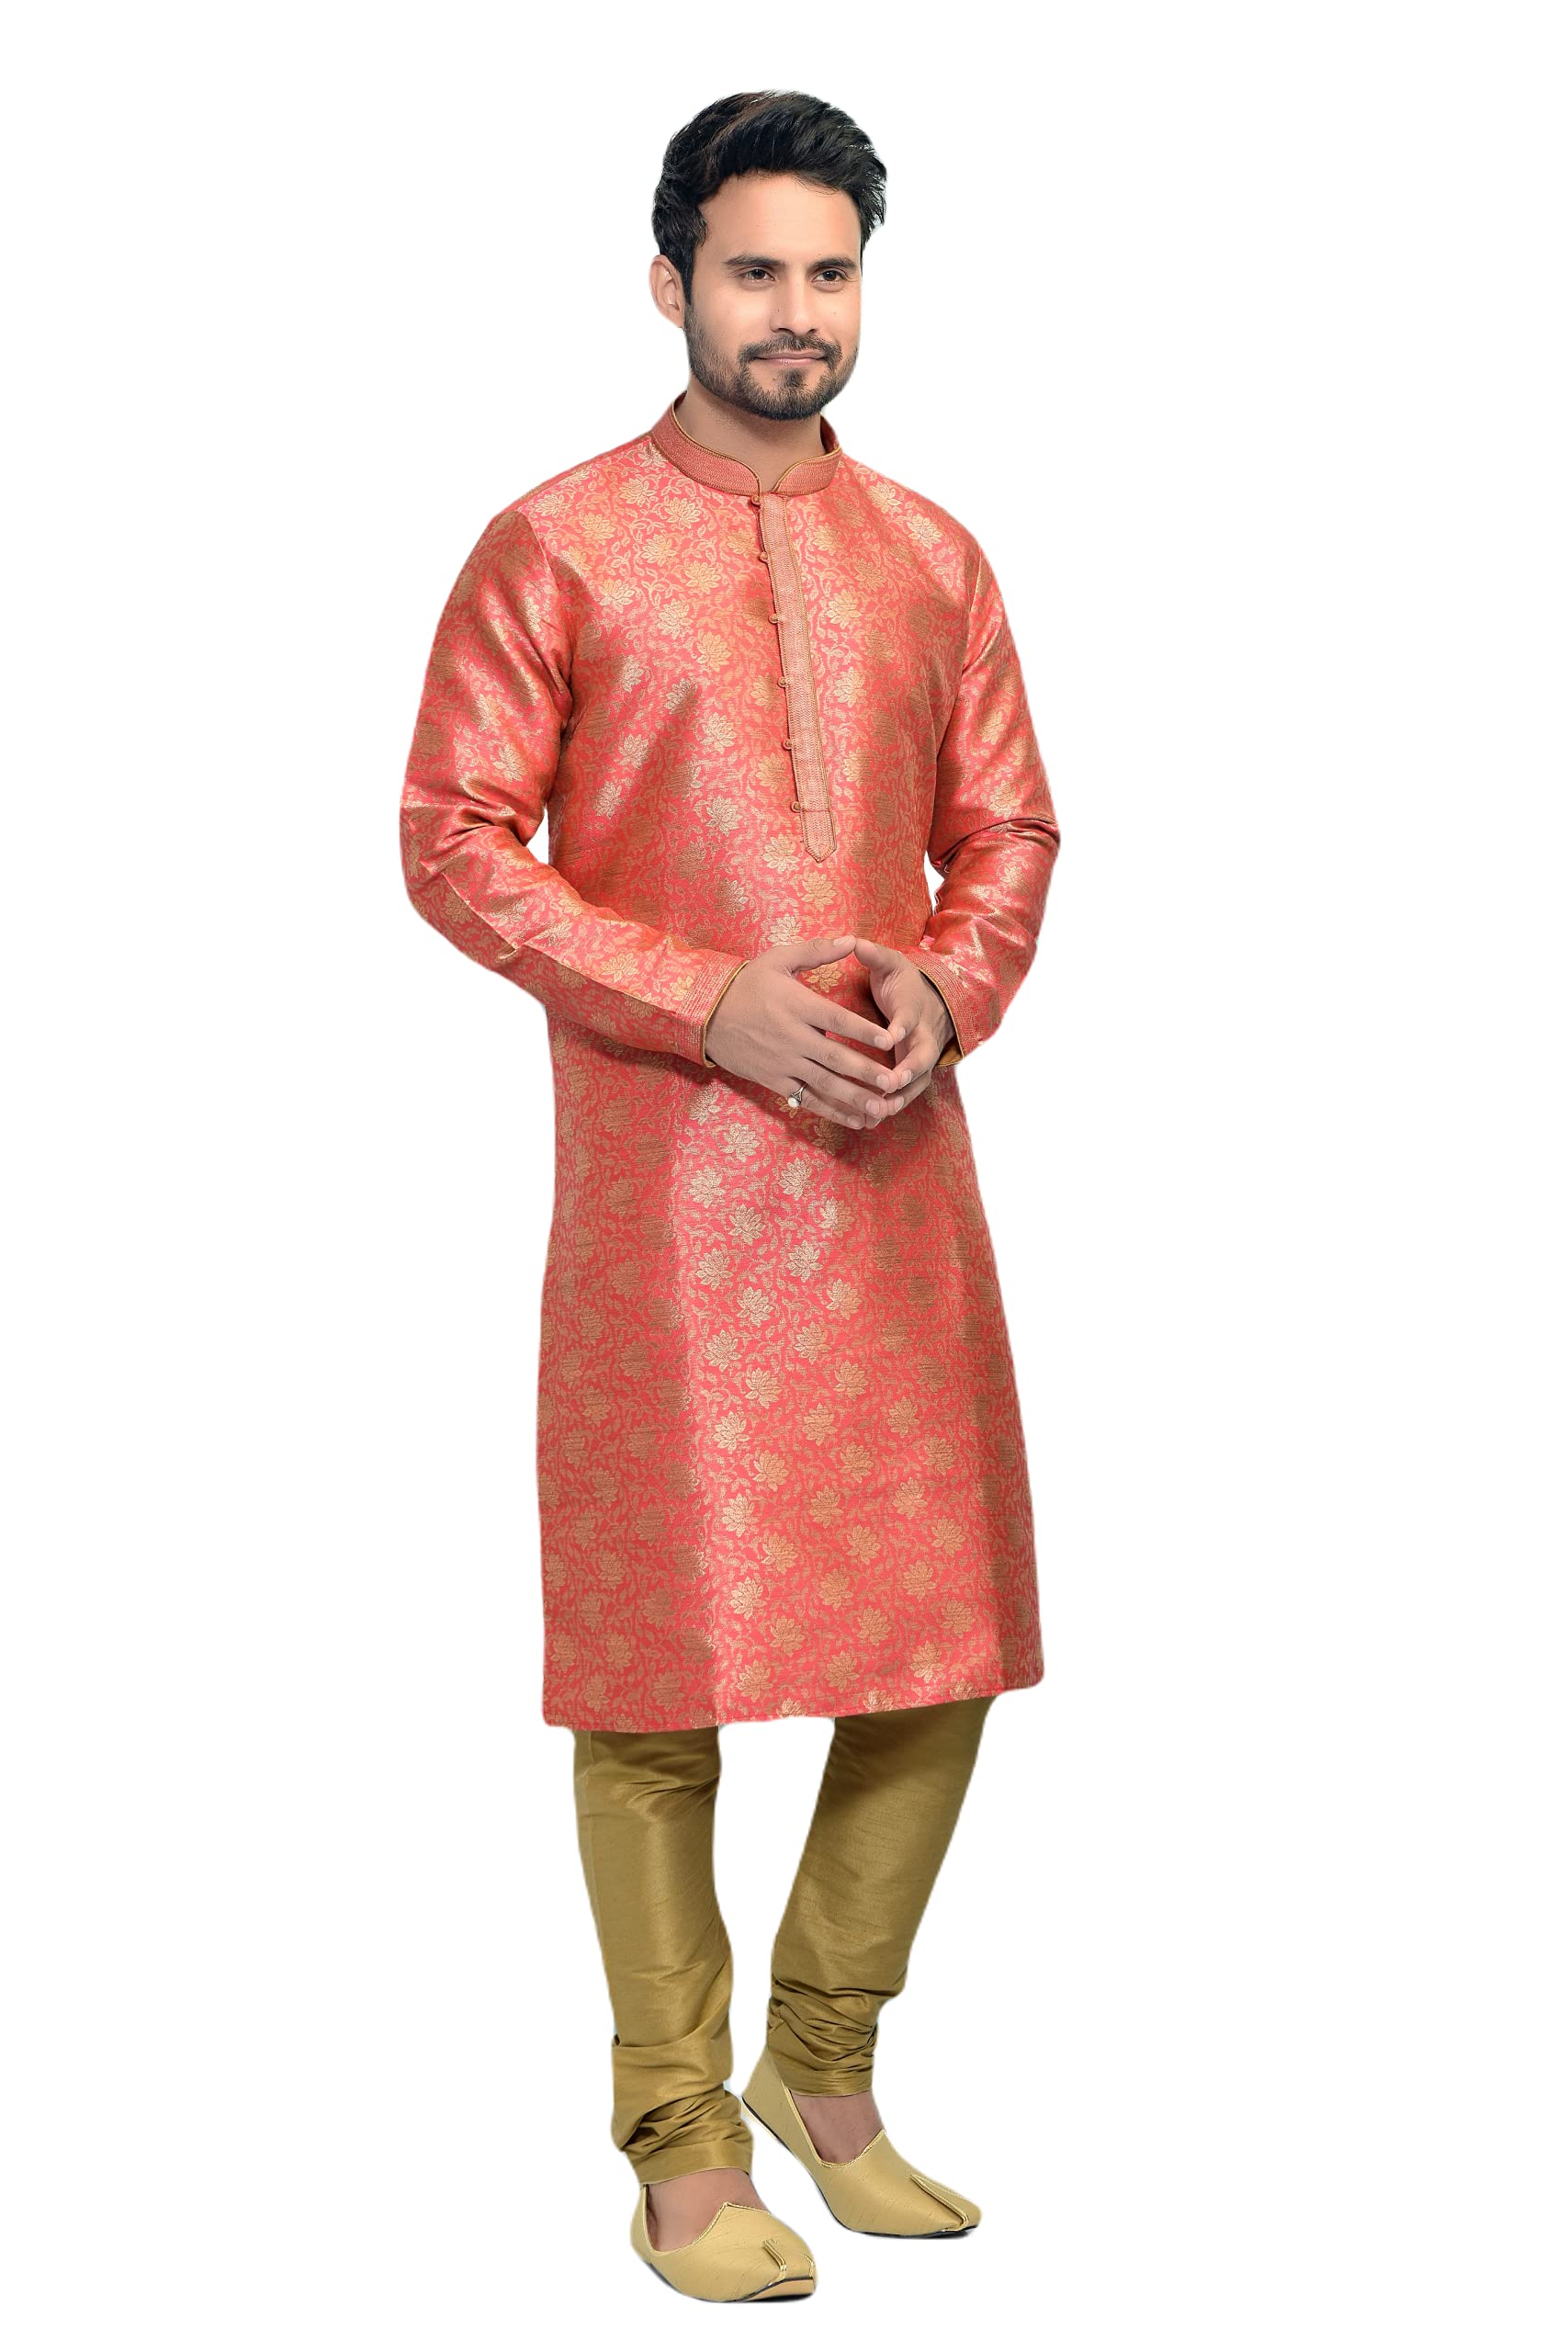 Indian Traditional Wedding Party Wear Tunic Kurta Pyjama Casual Ethnic Dress Set For Men